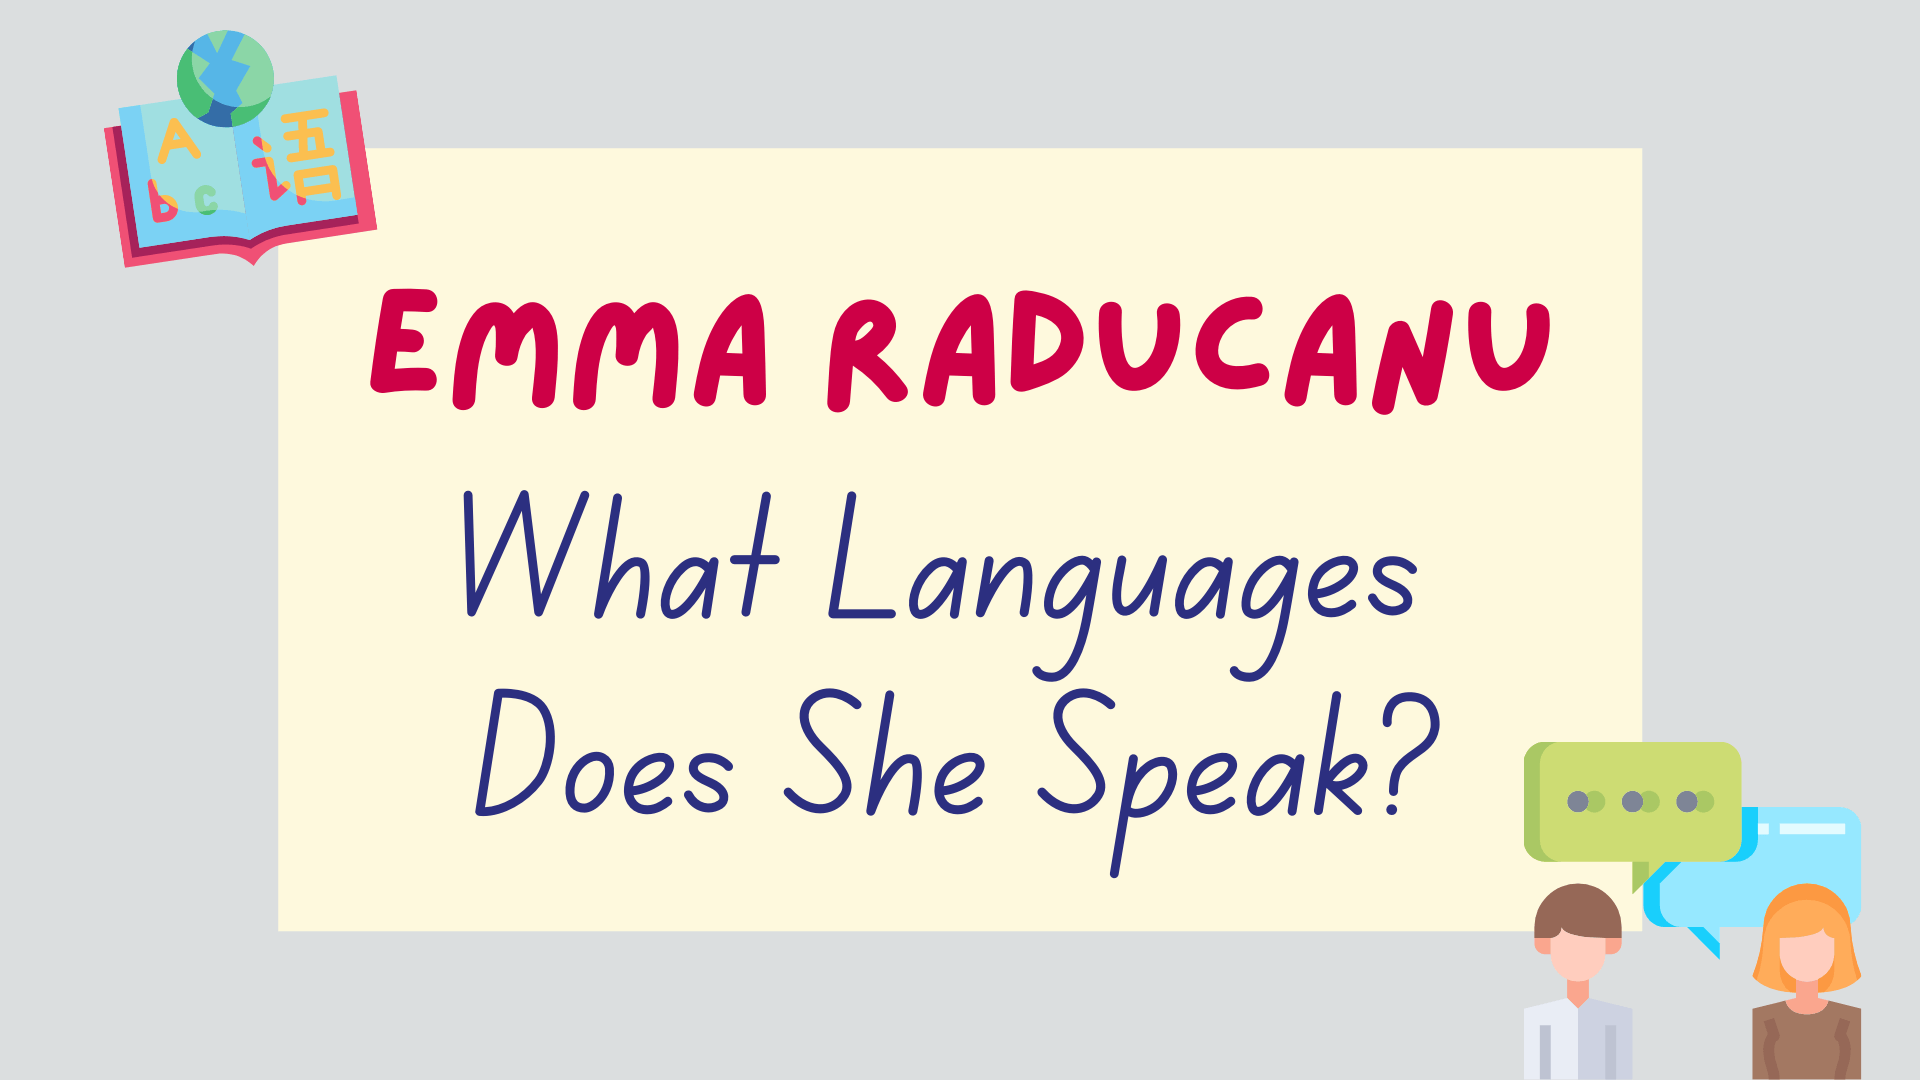 What languages does Emma Raducanu speak? - featured image